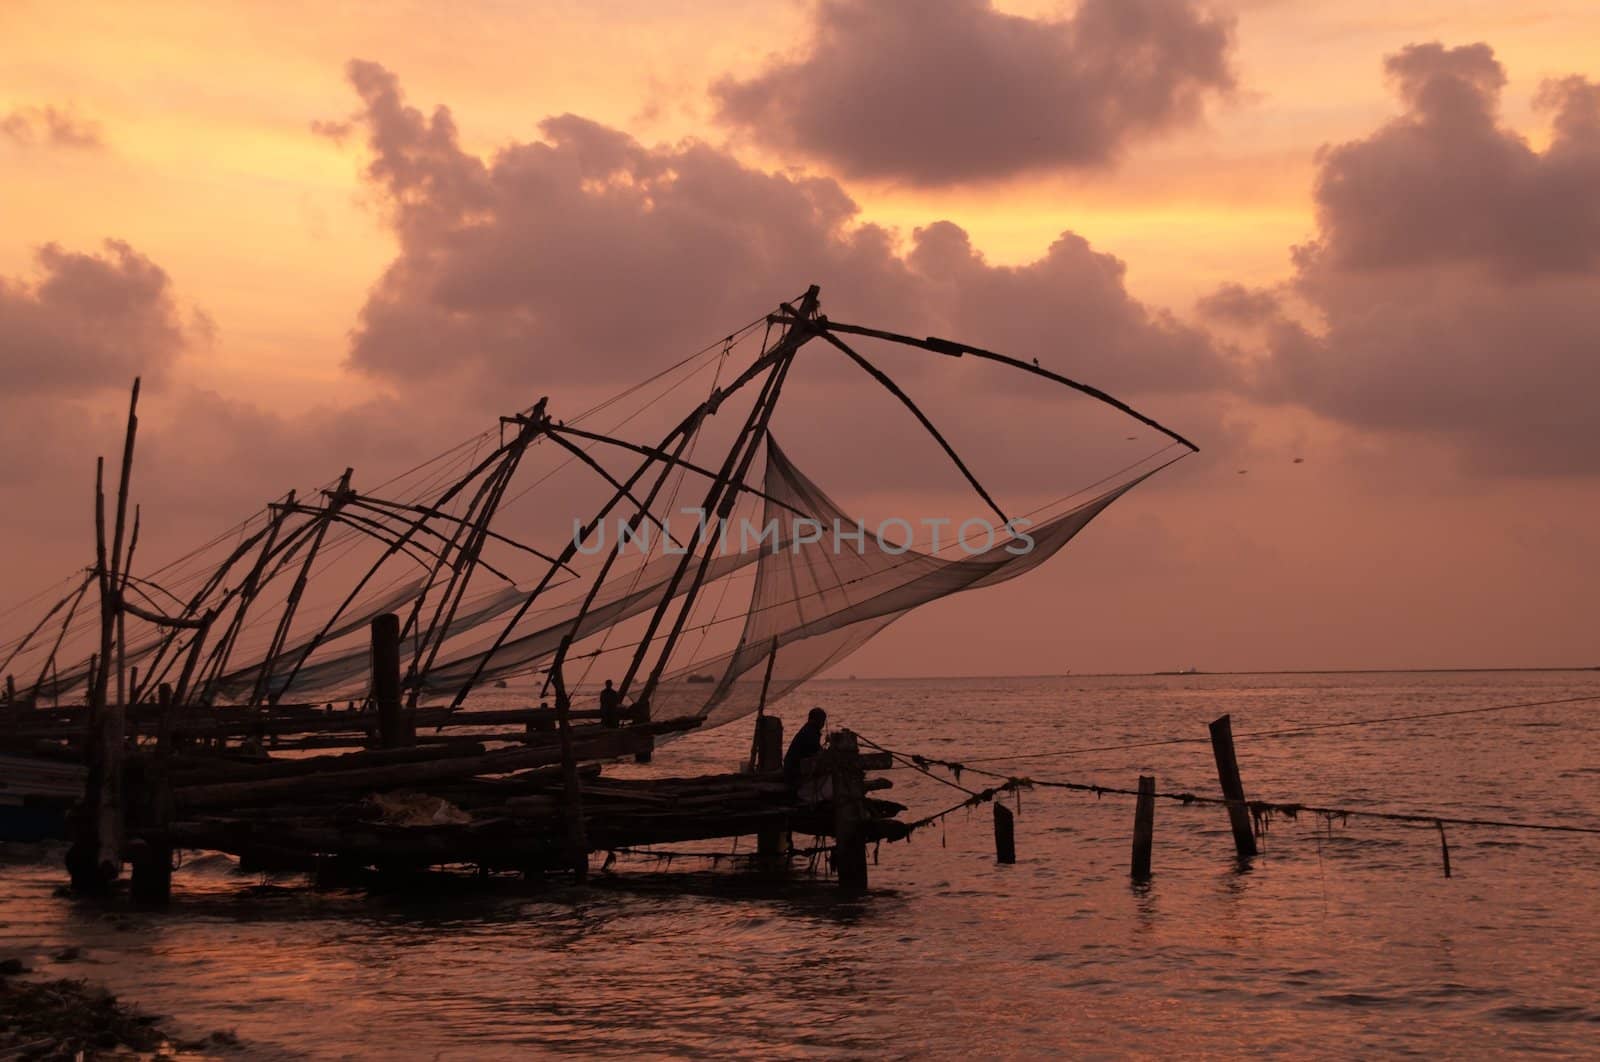 Chinese fishing nets lining the shore at Fort Kochi, Kerala, India